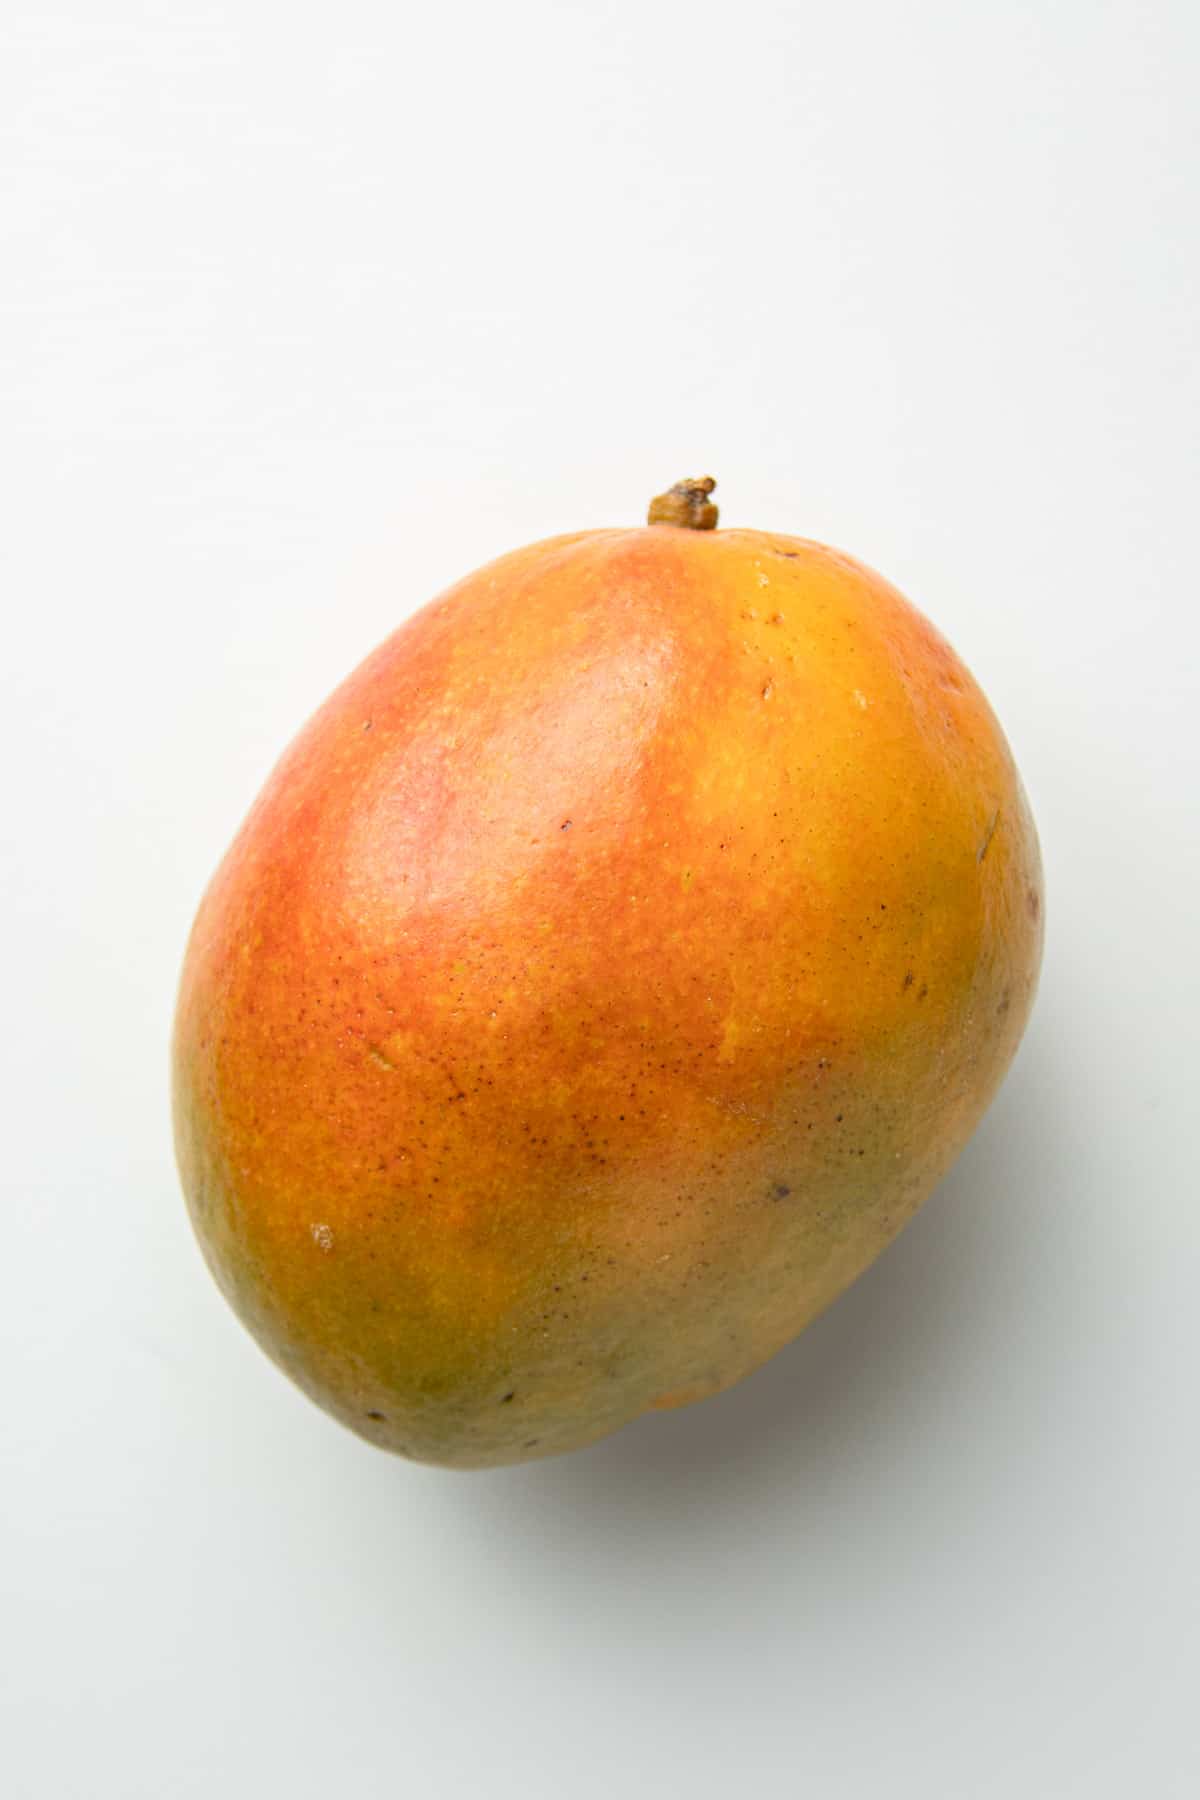 Ripe Keitt mango on a white surface.